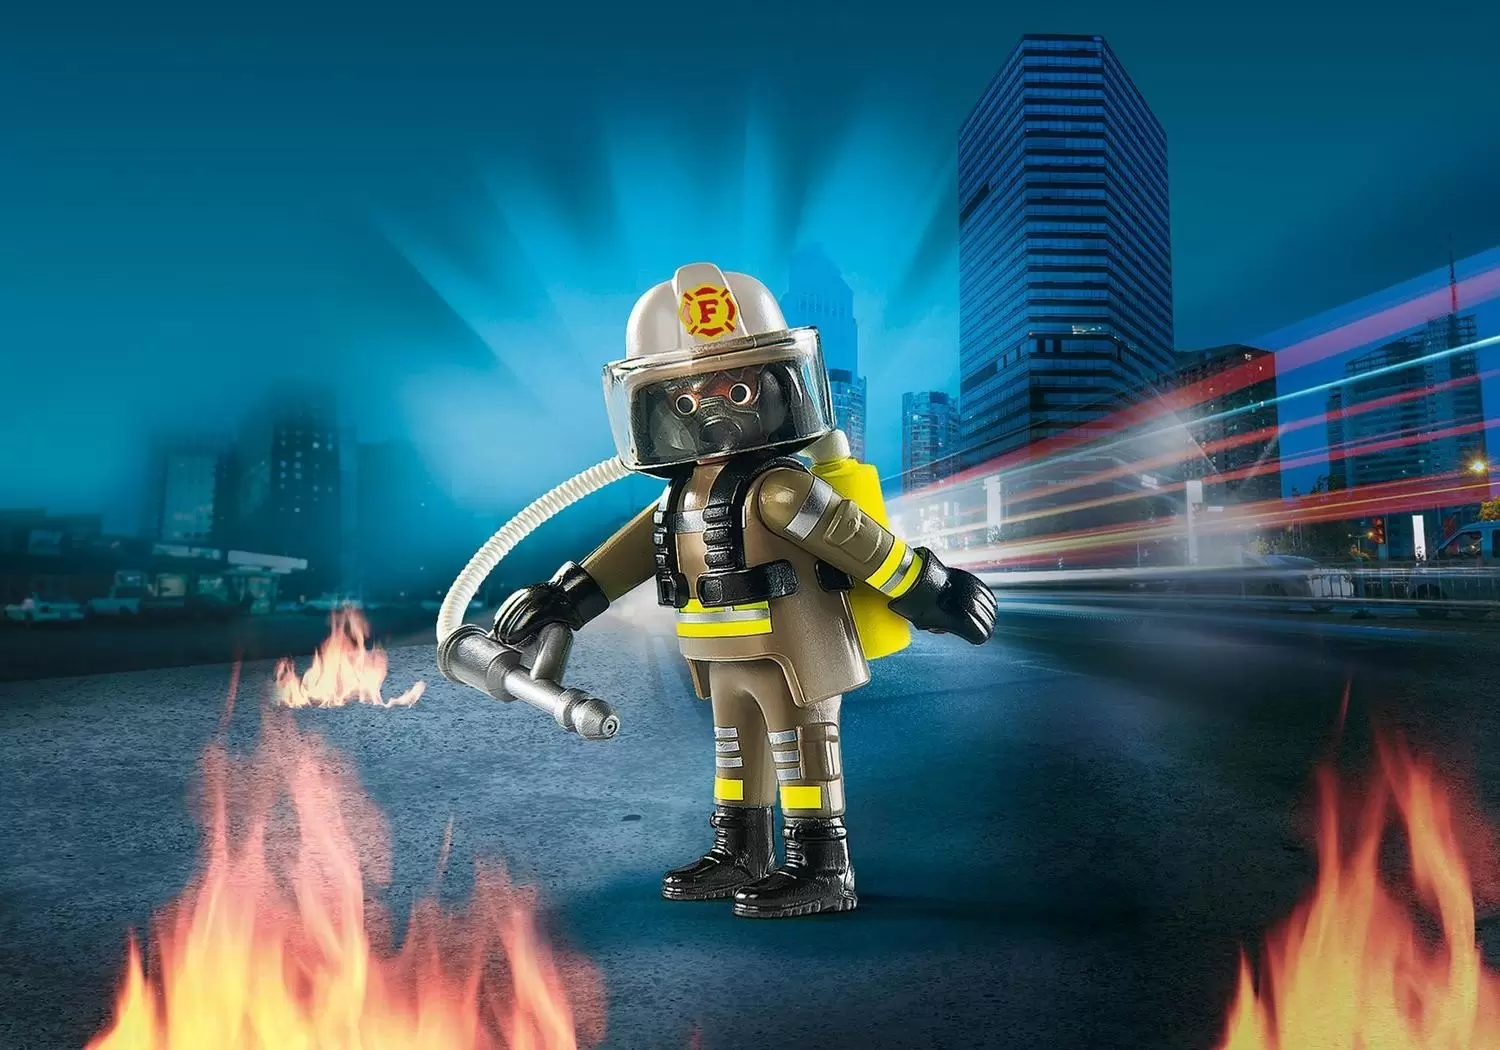 Playmo-Friends - Fireman with burning tree